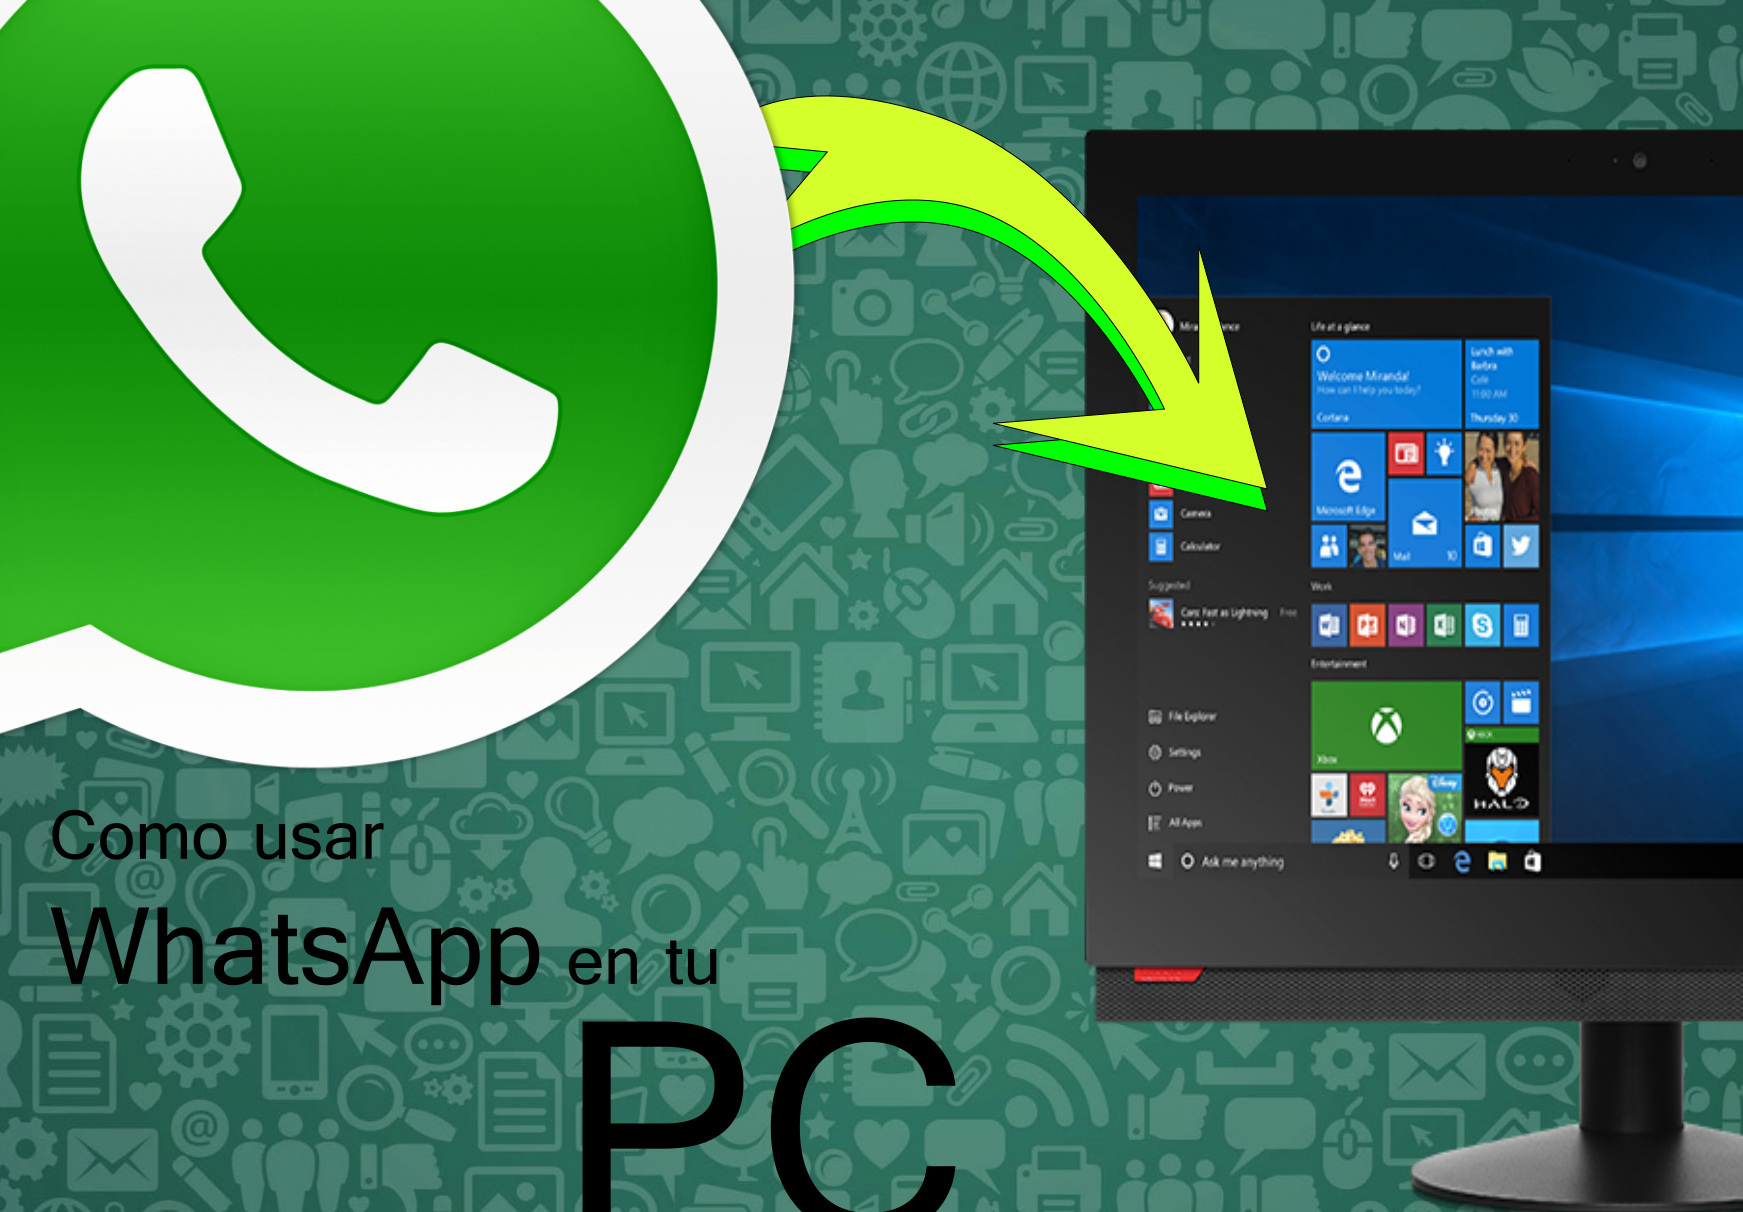 WhatsApp (2.2336.7.0) instal